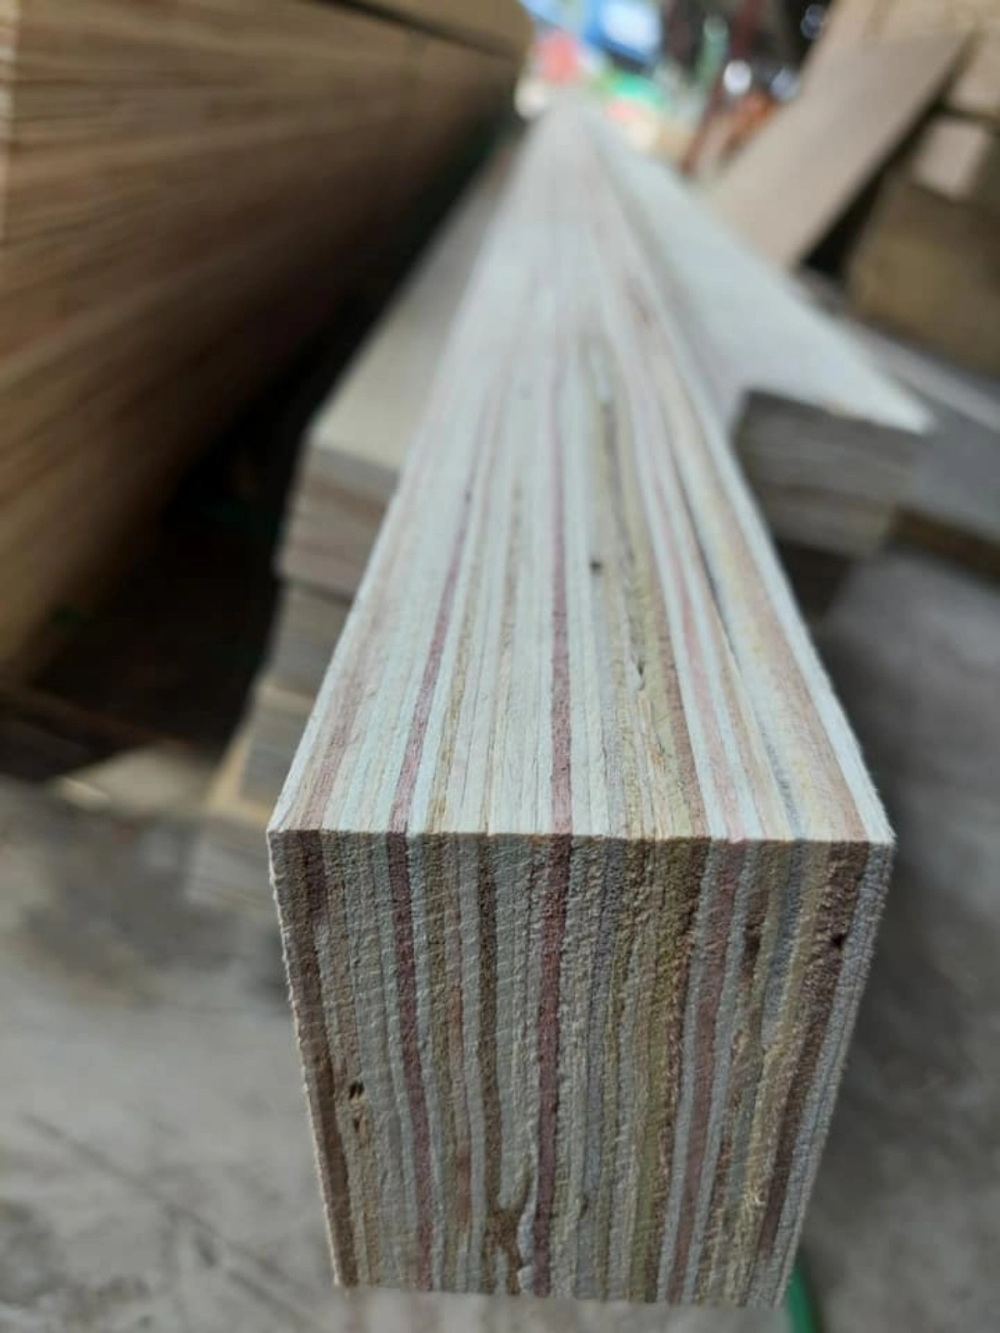 LVL Laminated Veneer Lumber